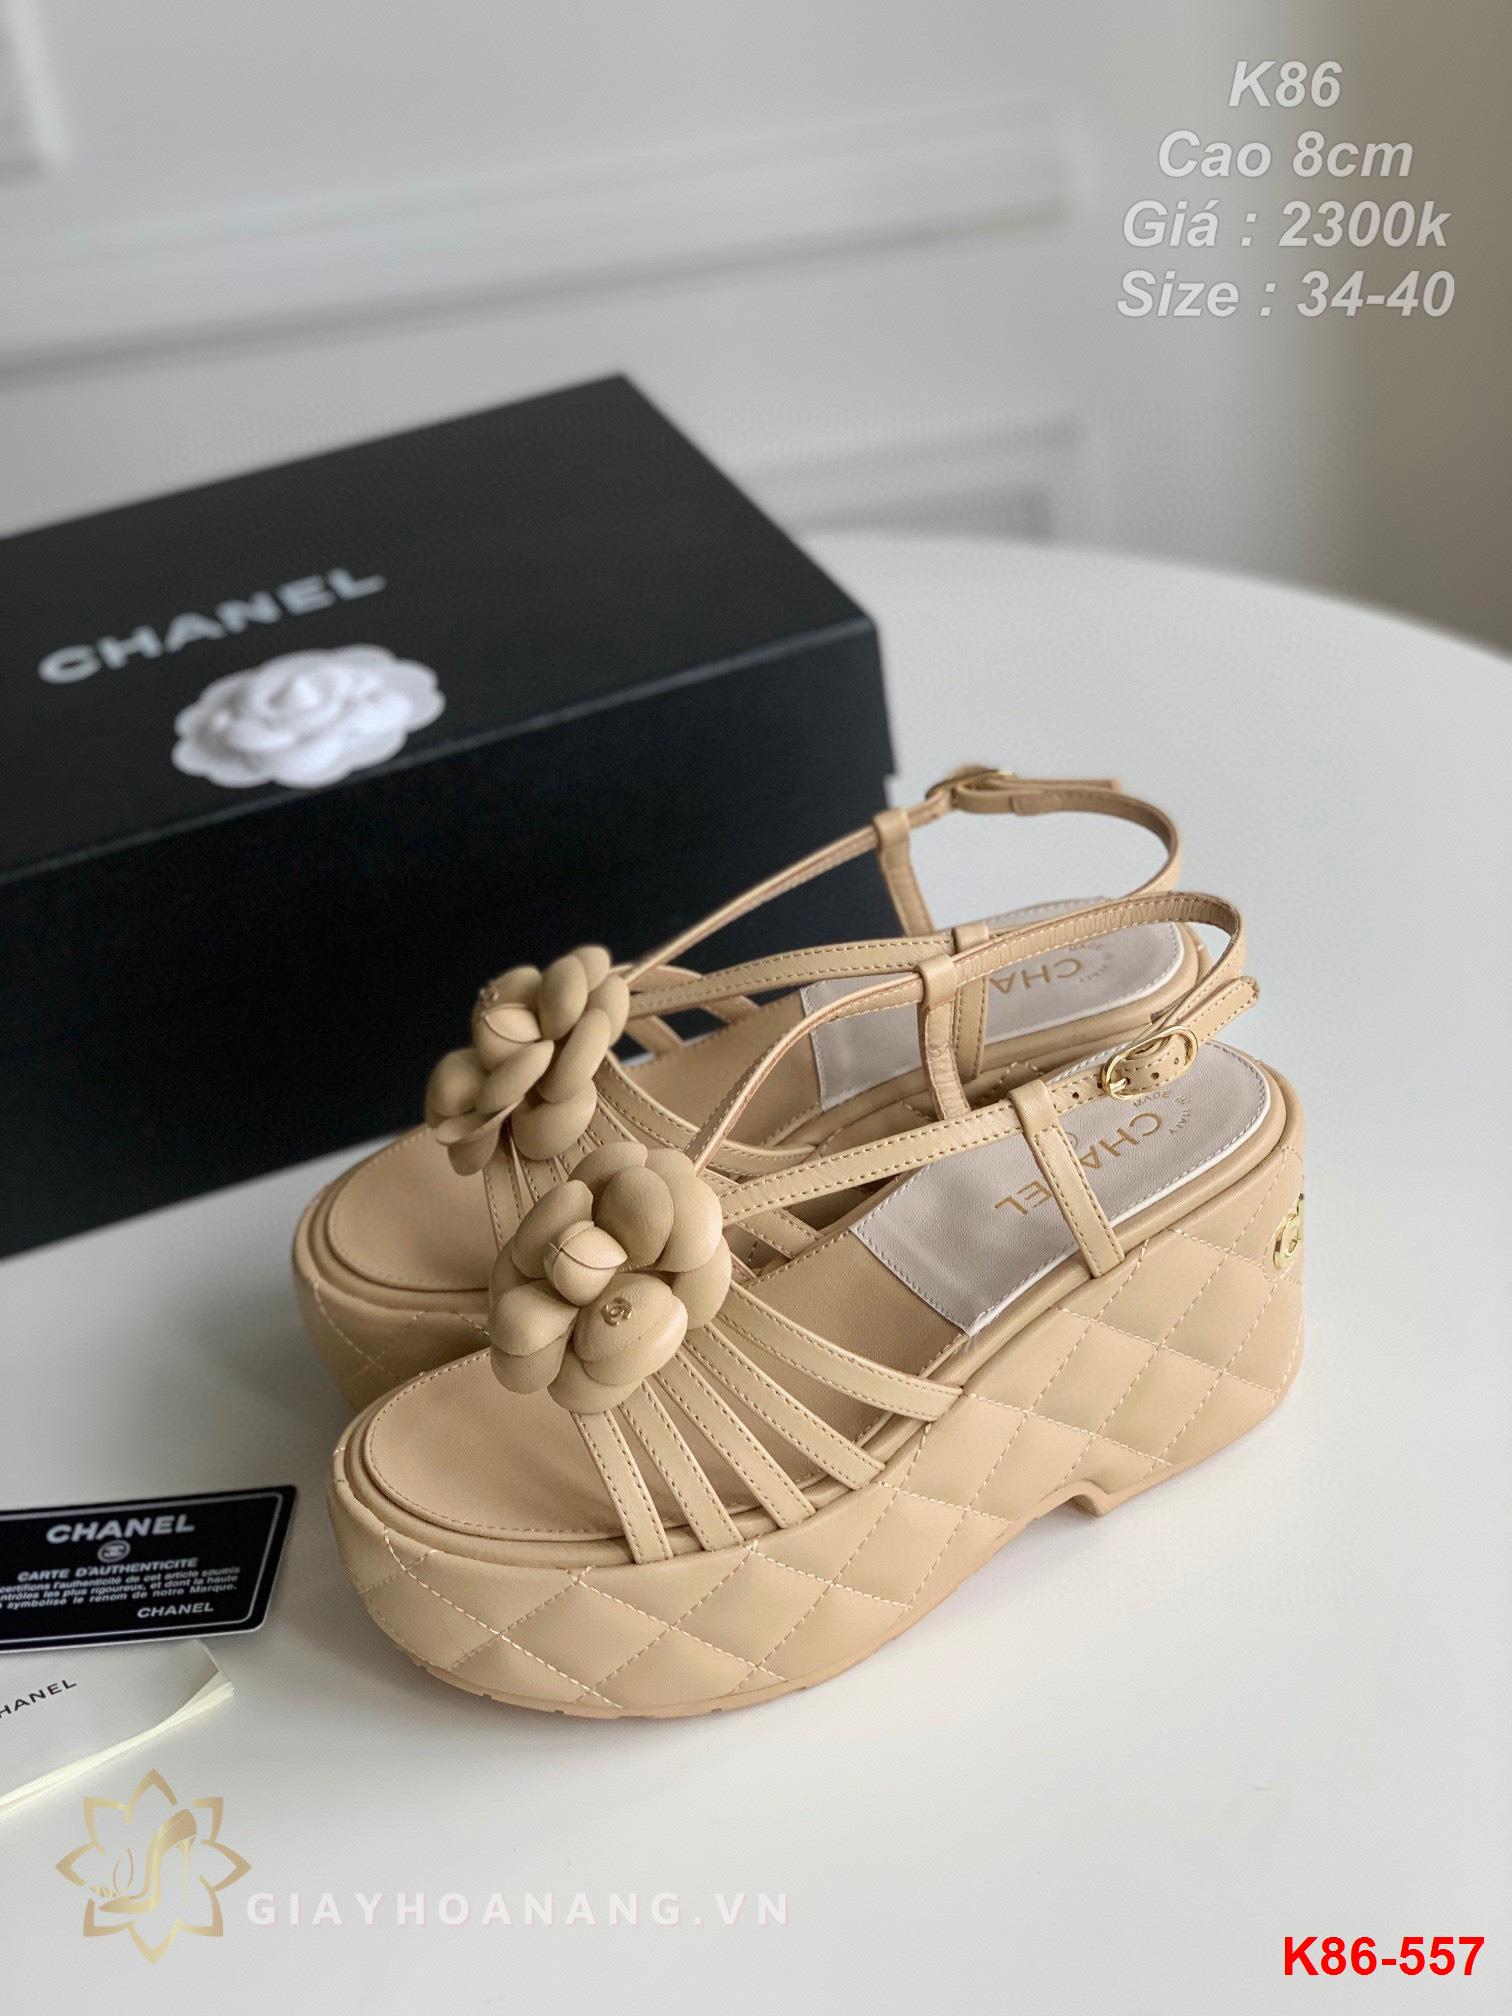 K86-557 Chanel sandal cao 8cm siêu cấp